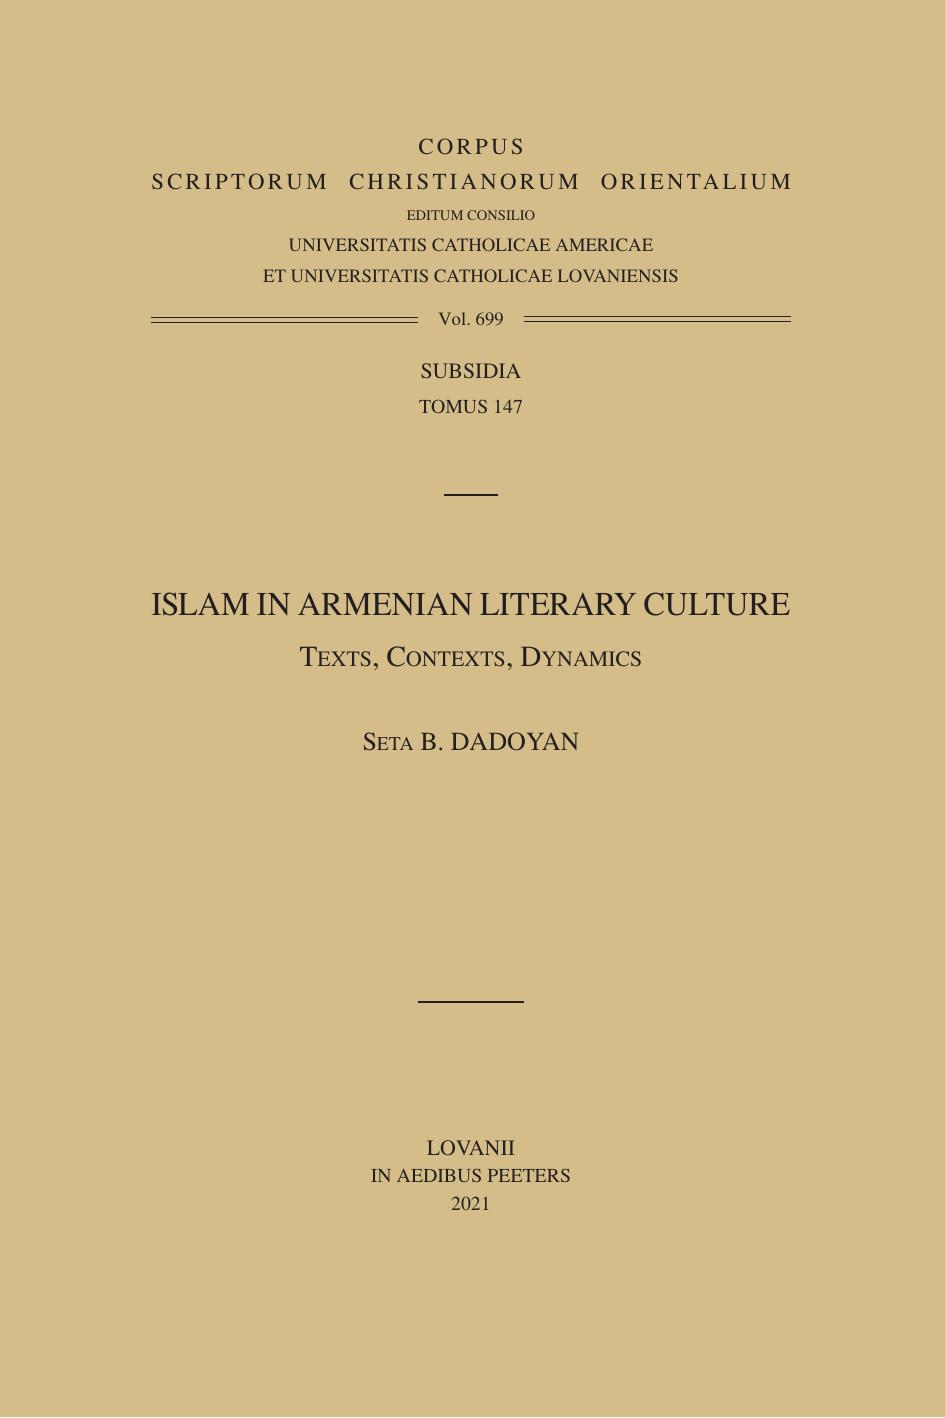 Islam in Armenian Literary Culture by S.B. Dadoyan